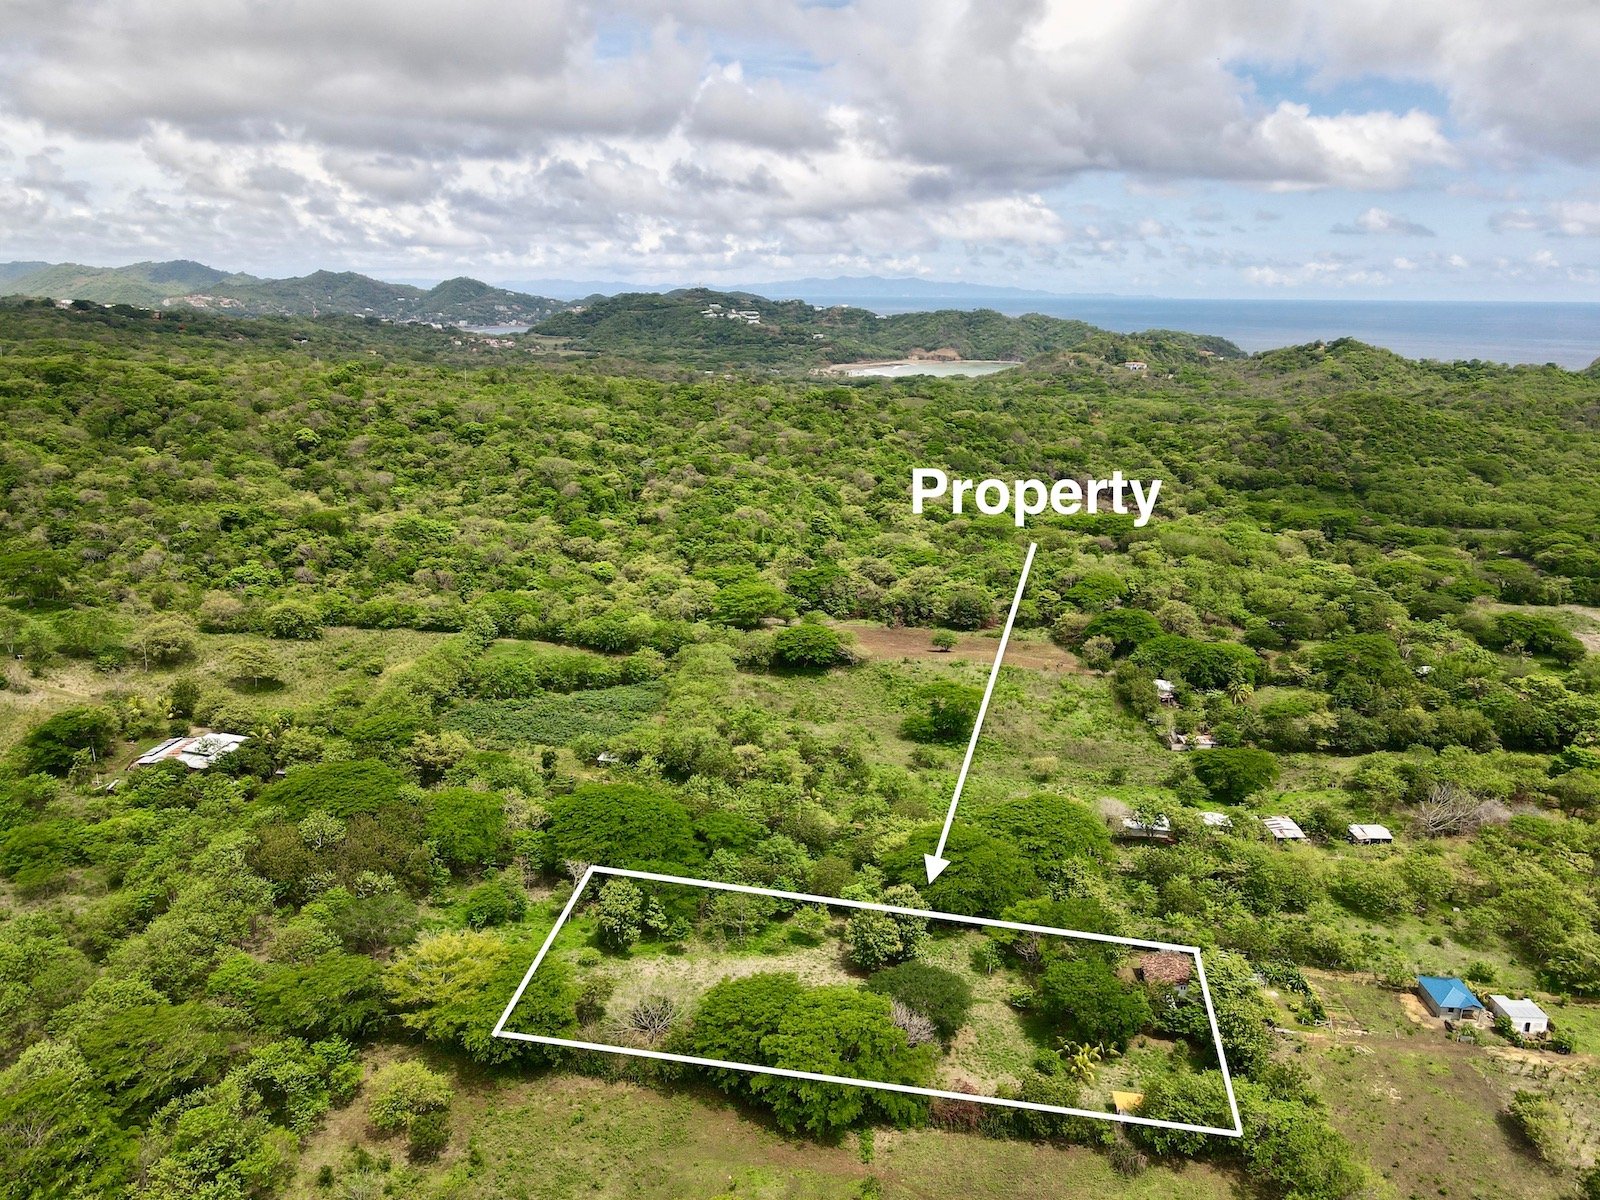 Acreage For Sale Nicaragua 2022 Property Real Estate 17.jpg